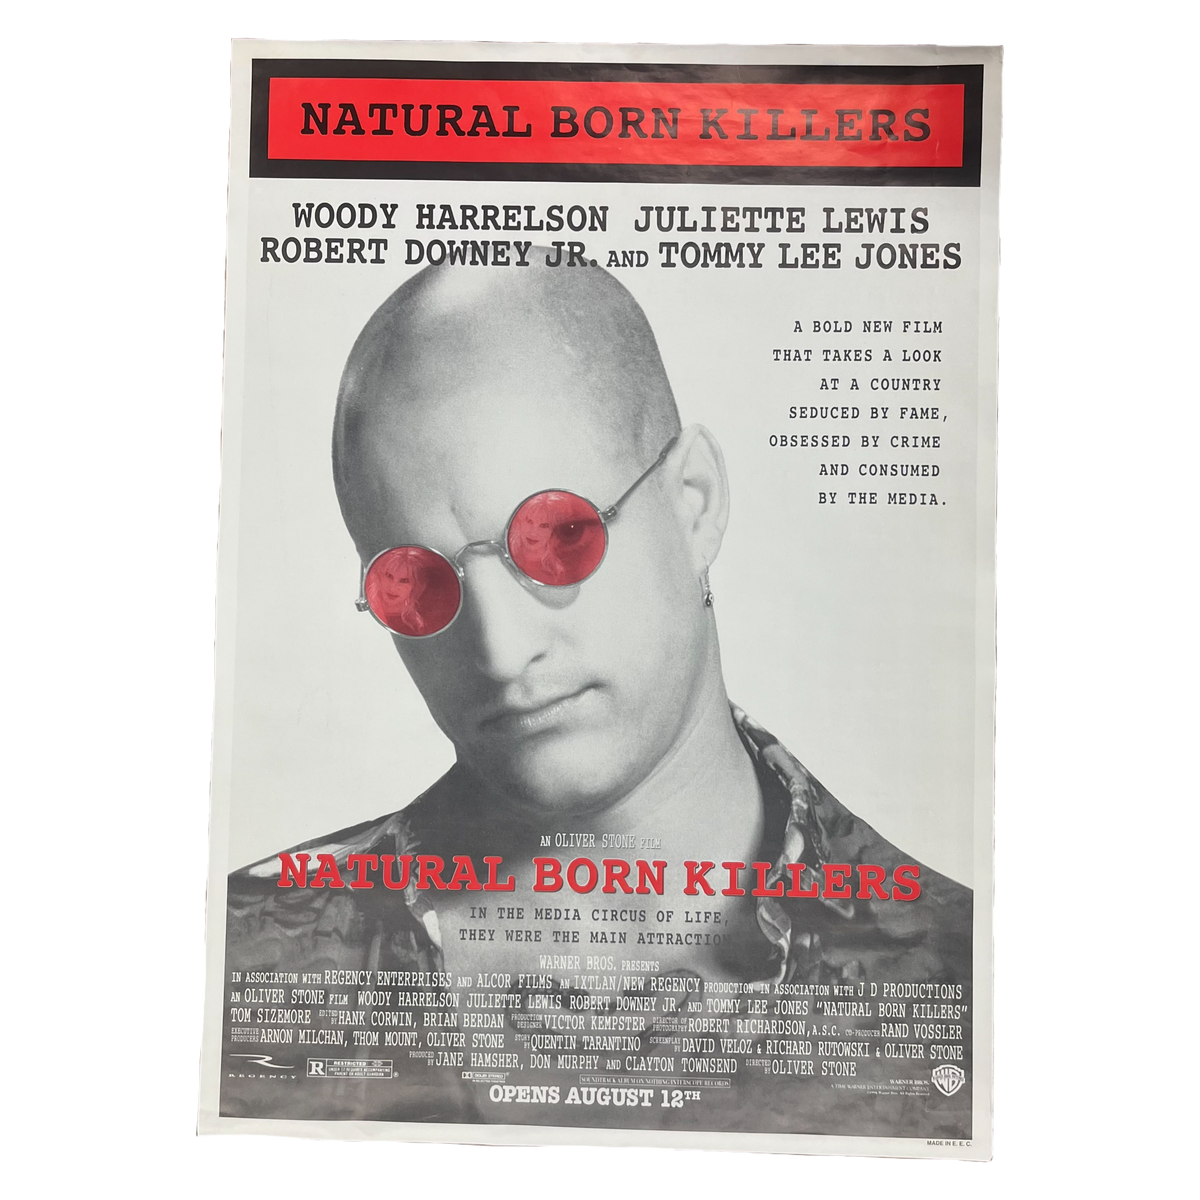 Vintage Natural Born Killers &quot;Woody Harrelson Juliette Lewis&quot; Movie Poster